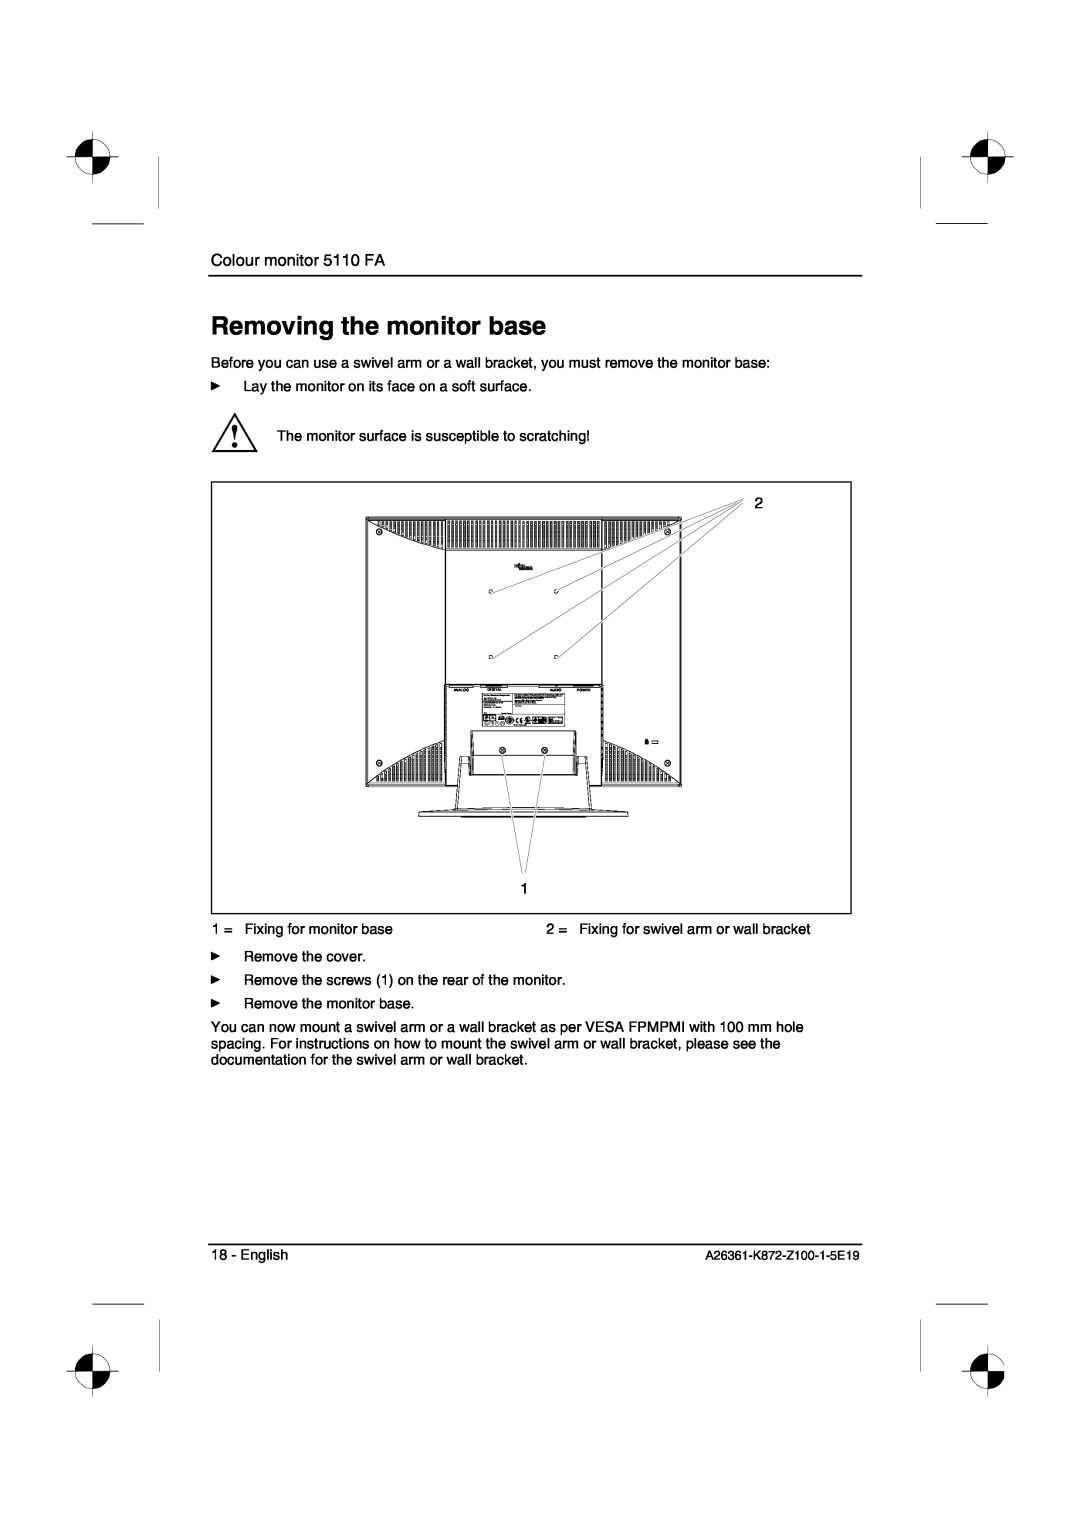 Fujitsu Siemens Computers manual Removing the monitor base, Colour monitor 5110 FA 